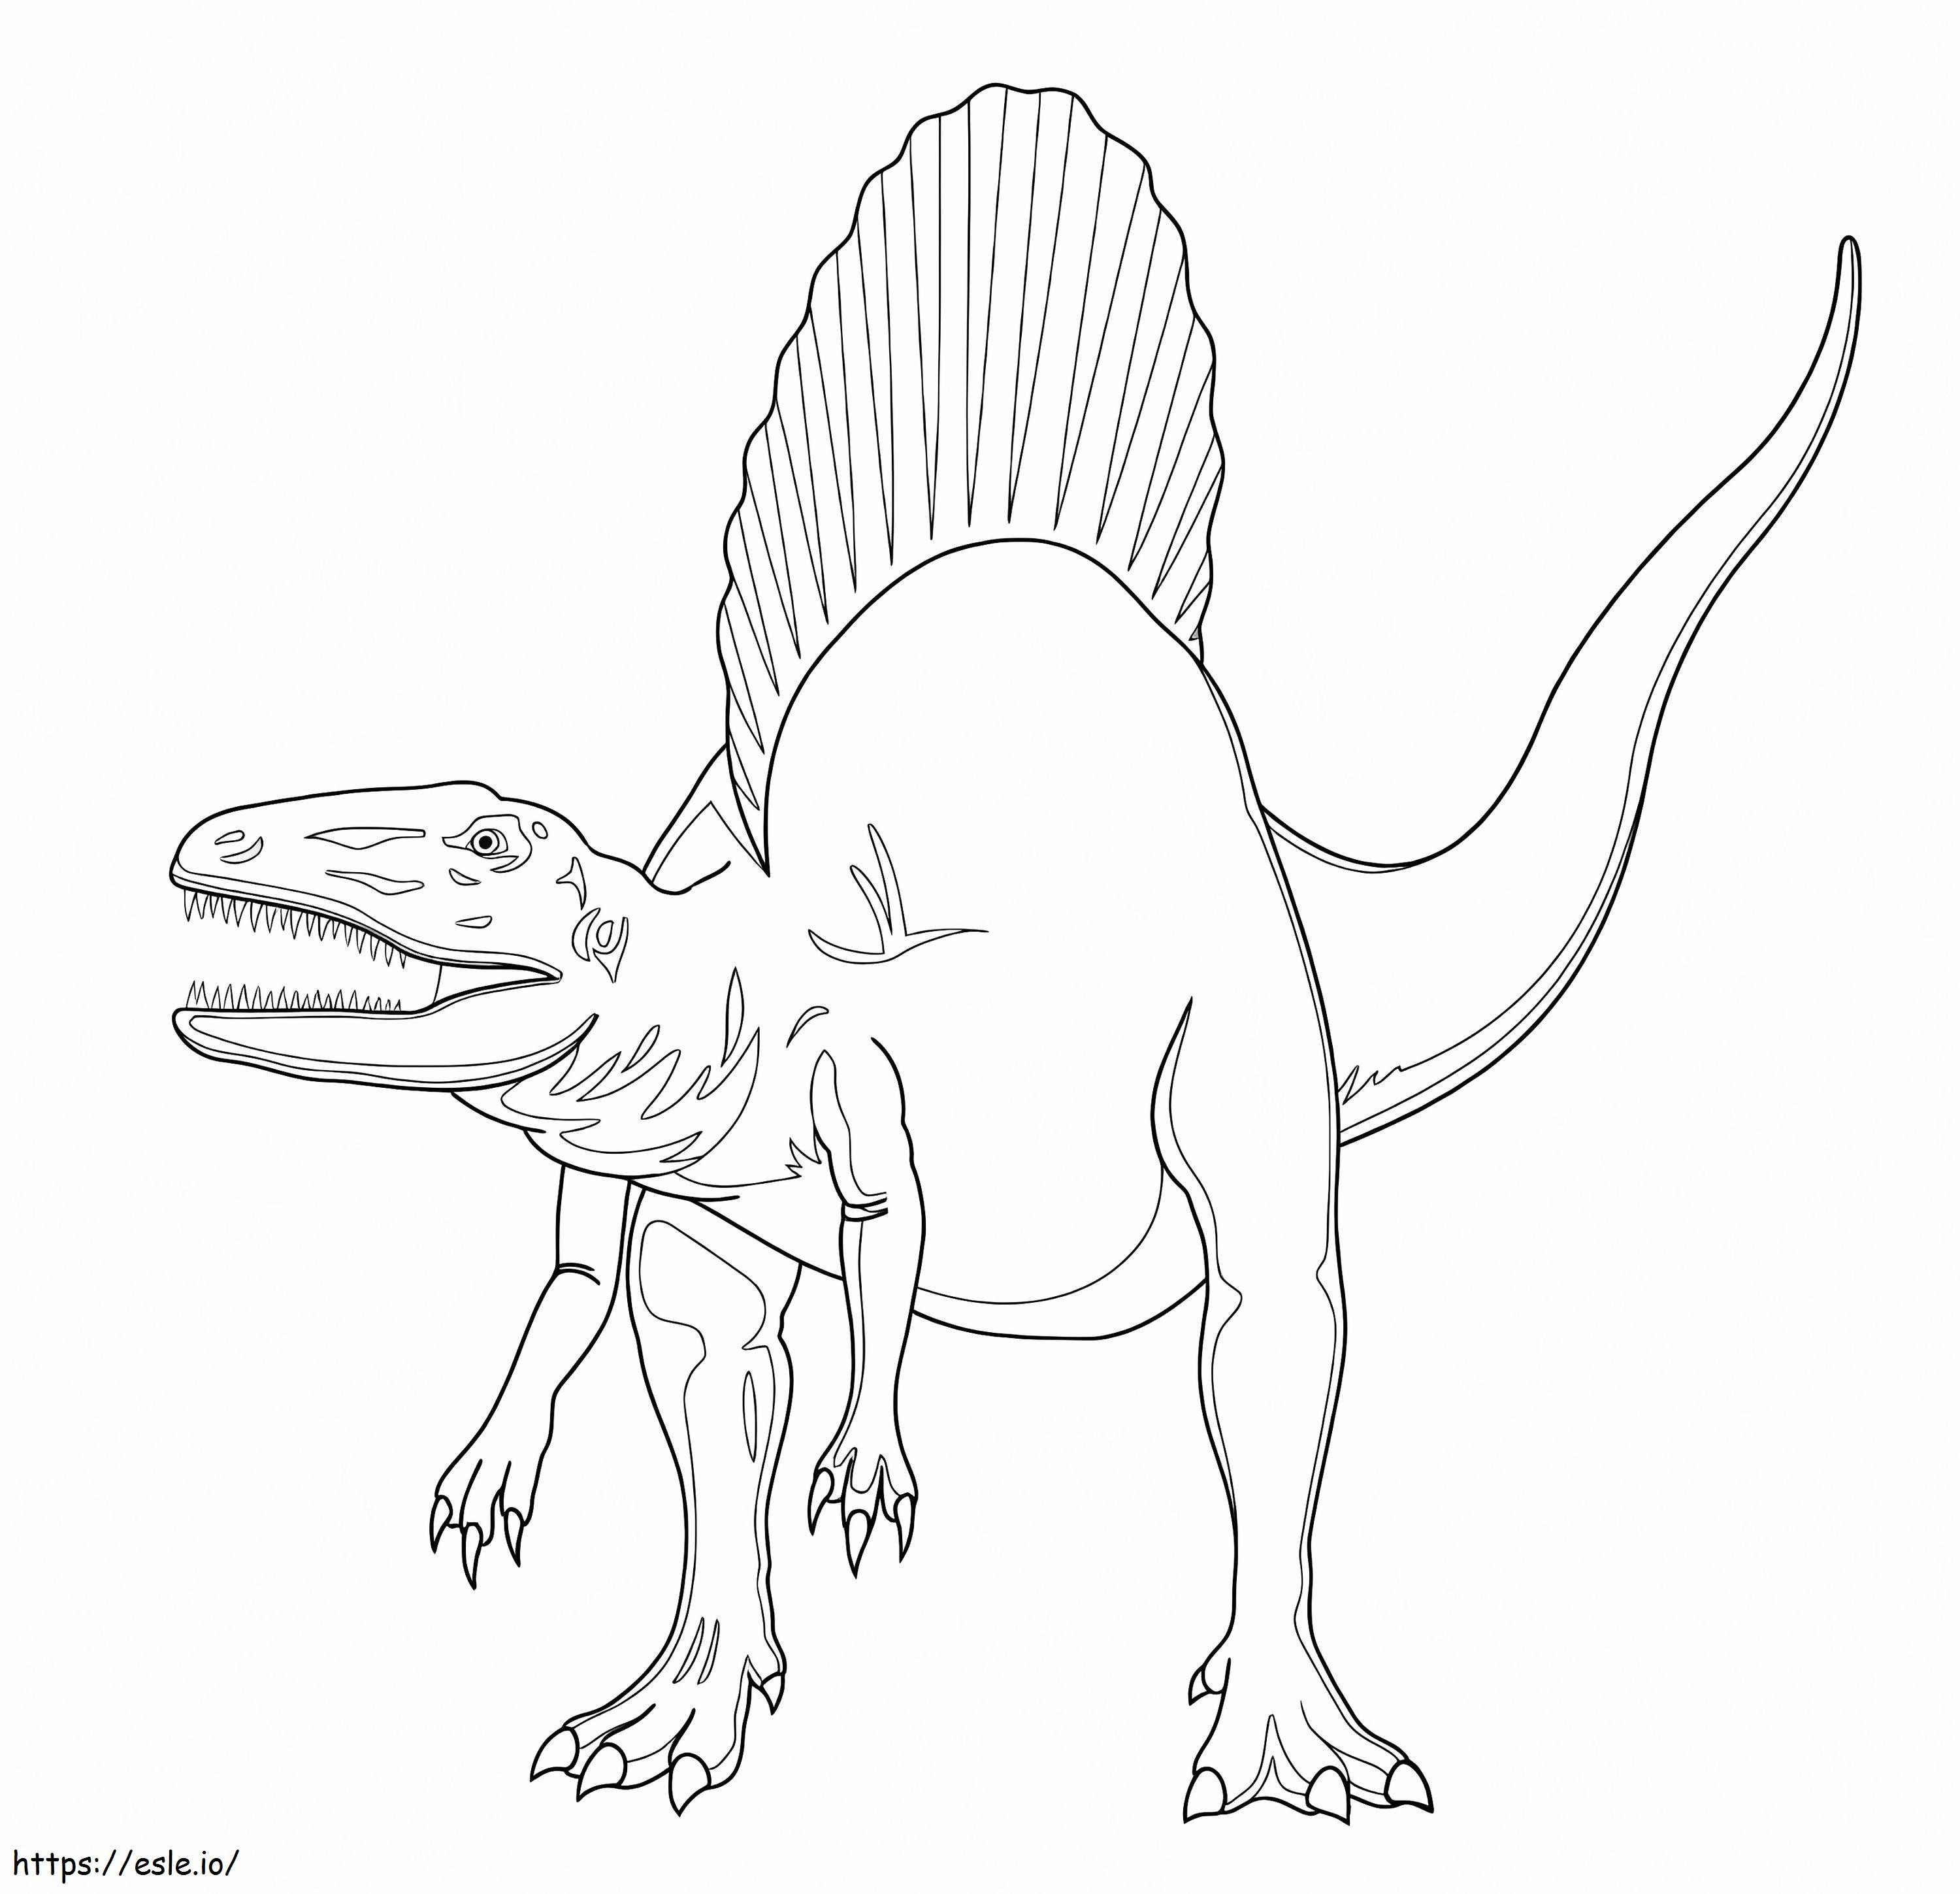 Spinosaurus 7 coloring page